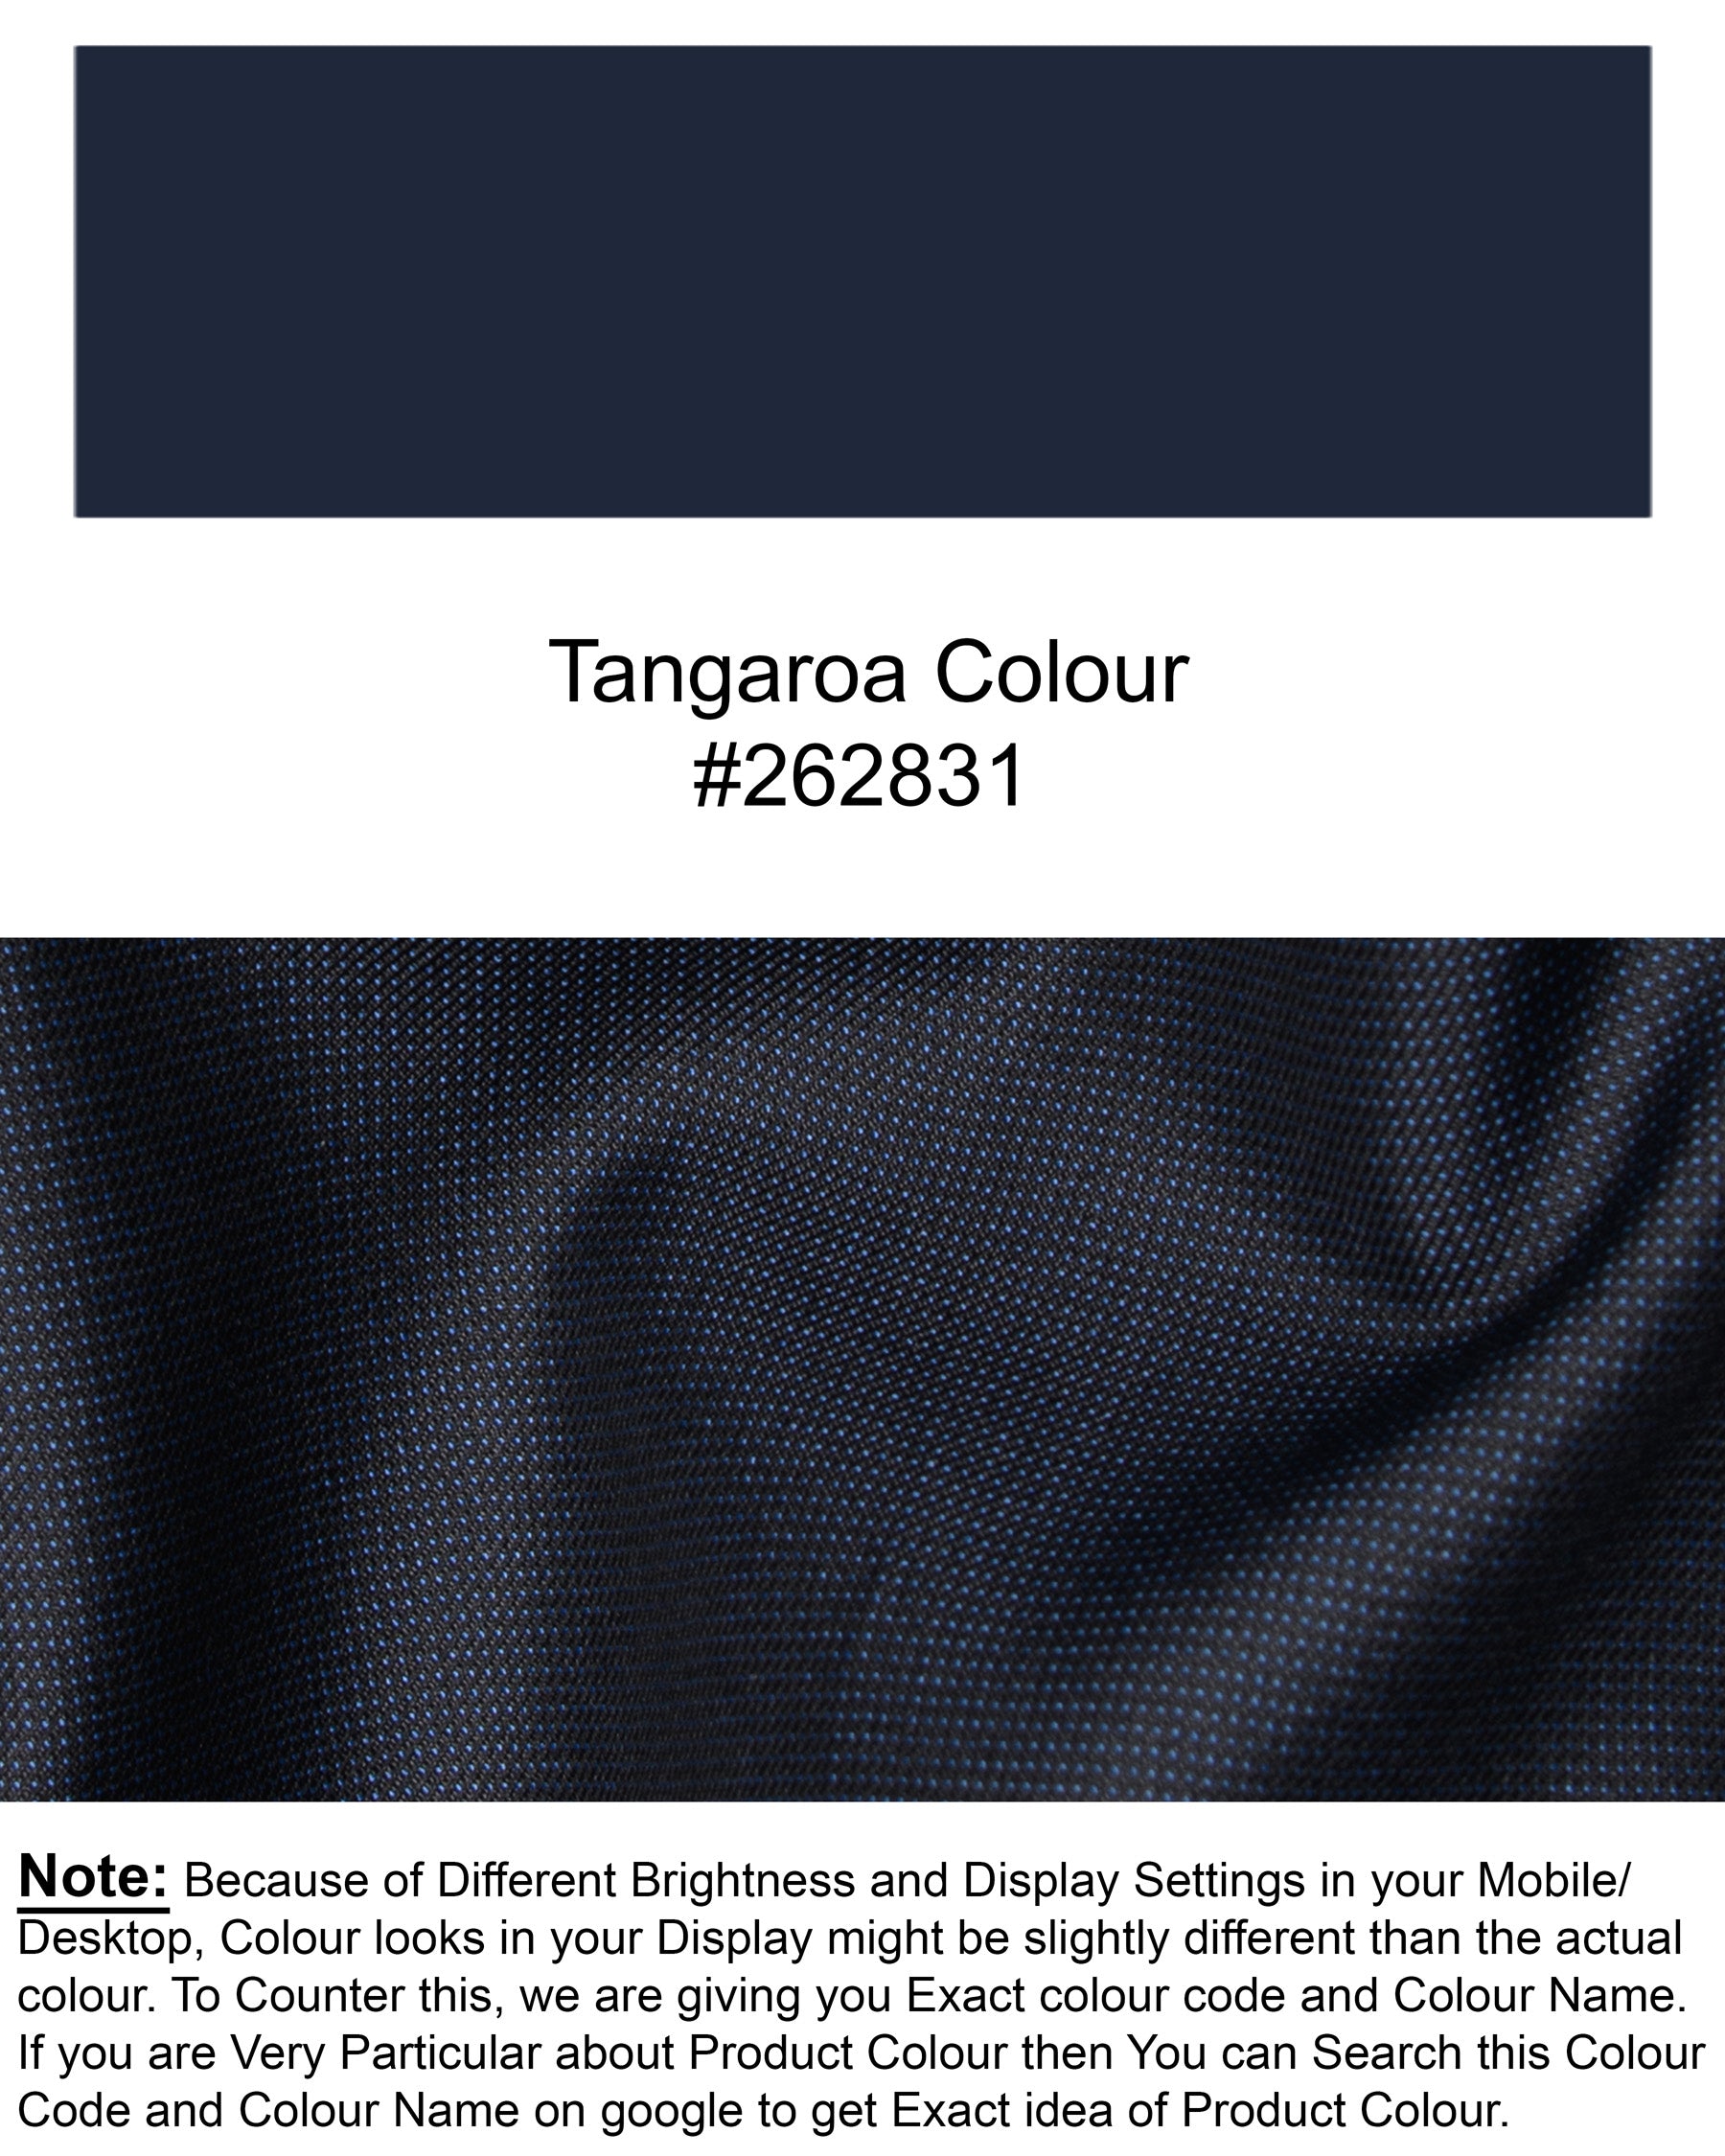 Tangaroa Blue Wool Rich Tuxedo Blazer BL1349-BKL-36, BL1349-BKL-38, BL1349-BKL-40, BL1349-BKL-42, BL1349-BKL-44, BL1349-BKL-46, BL1349-BKL-48, BL1349-BKL-50, BL1349-BKL-52, BL1349-BKL-54, BL1349-BKL-56, BL1349-BKL-58, BL1349-BKL-60